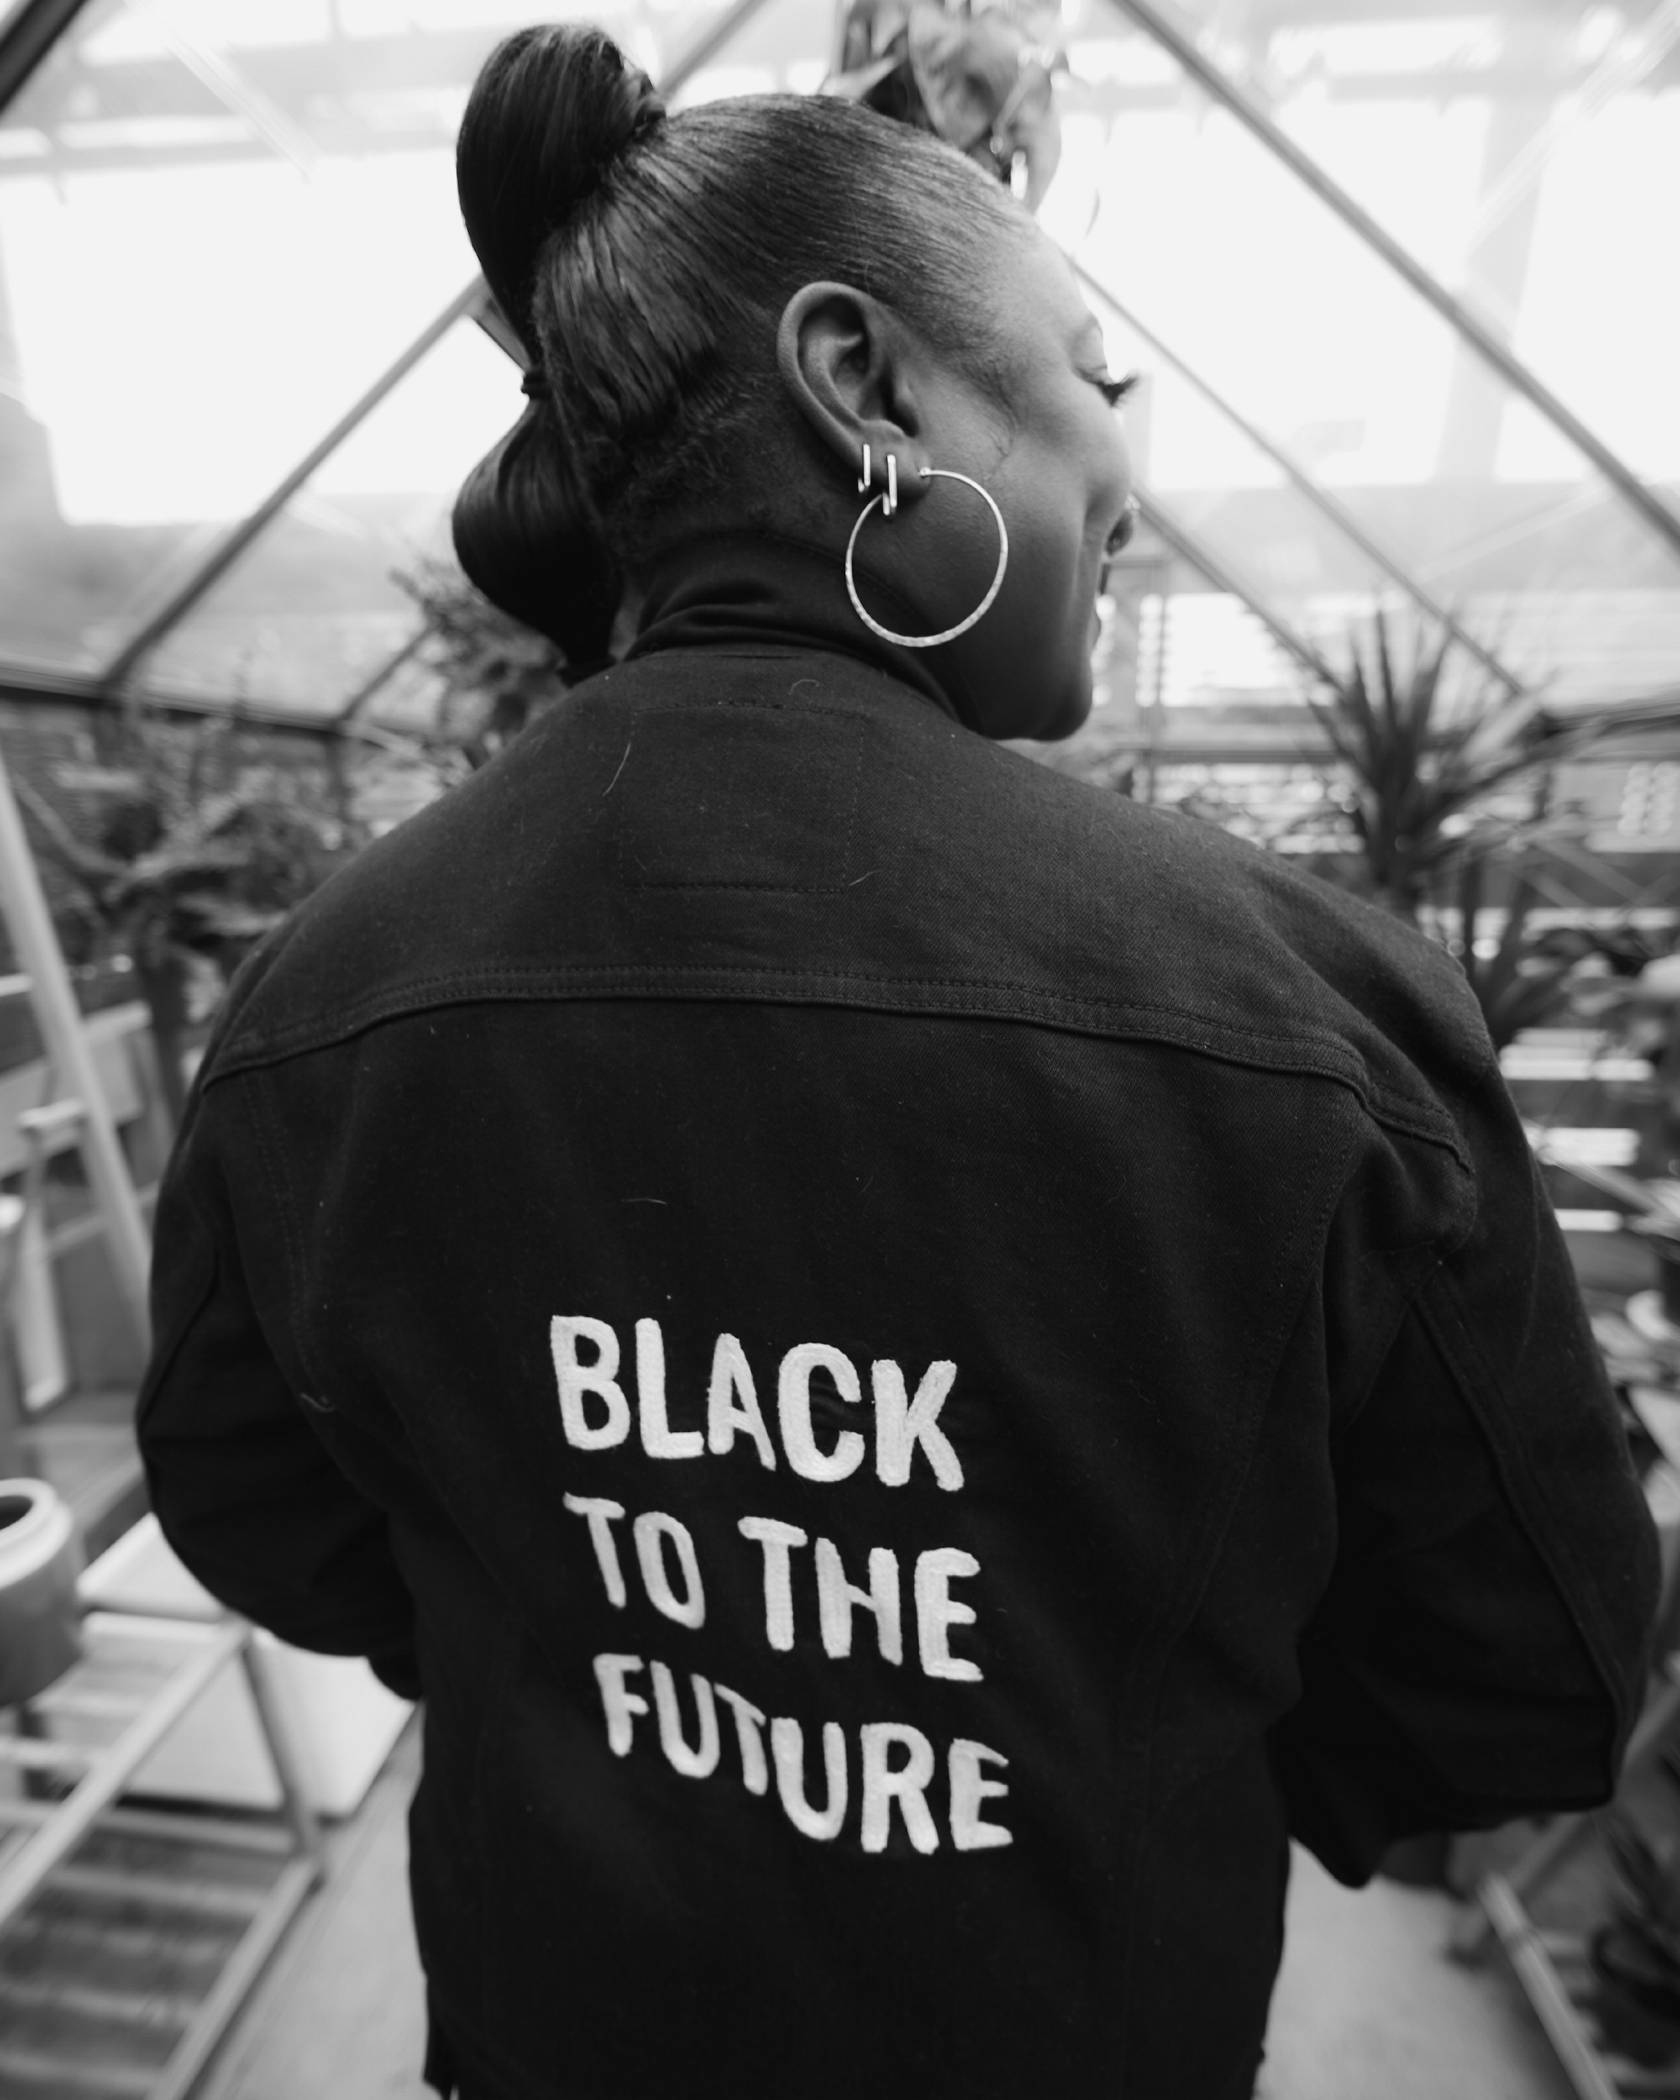 Black to the future jacket